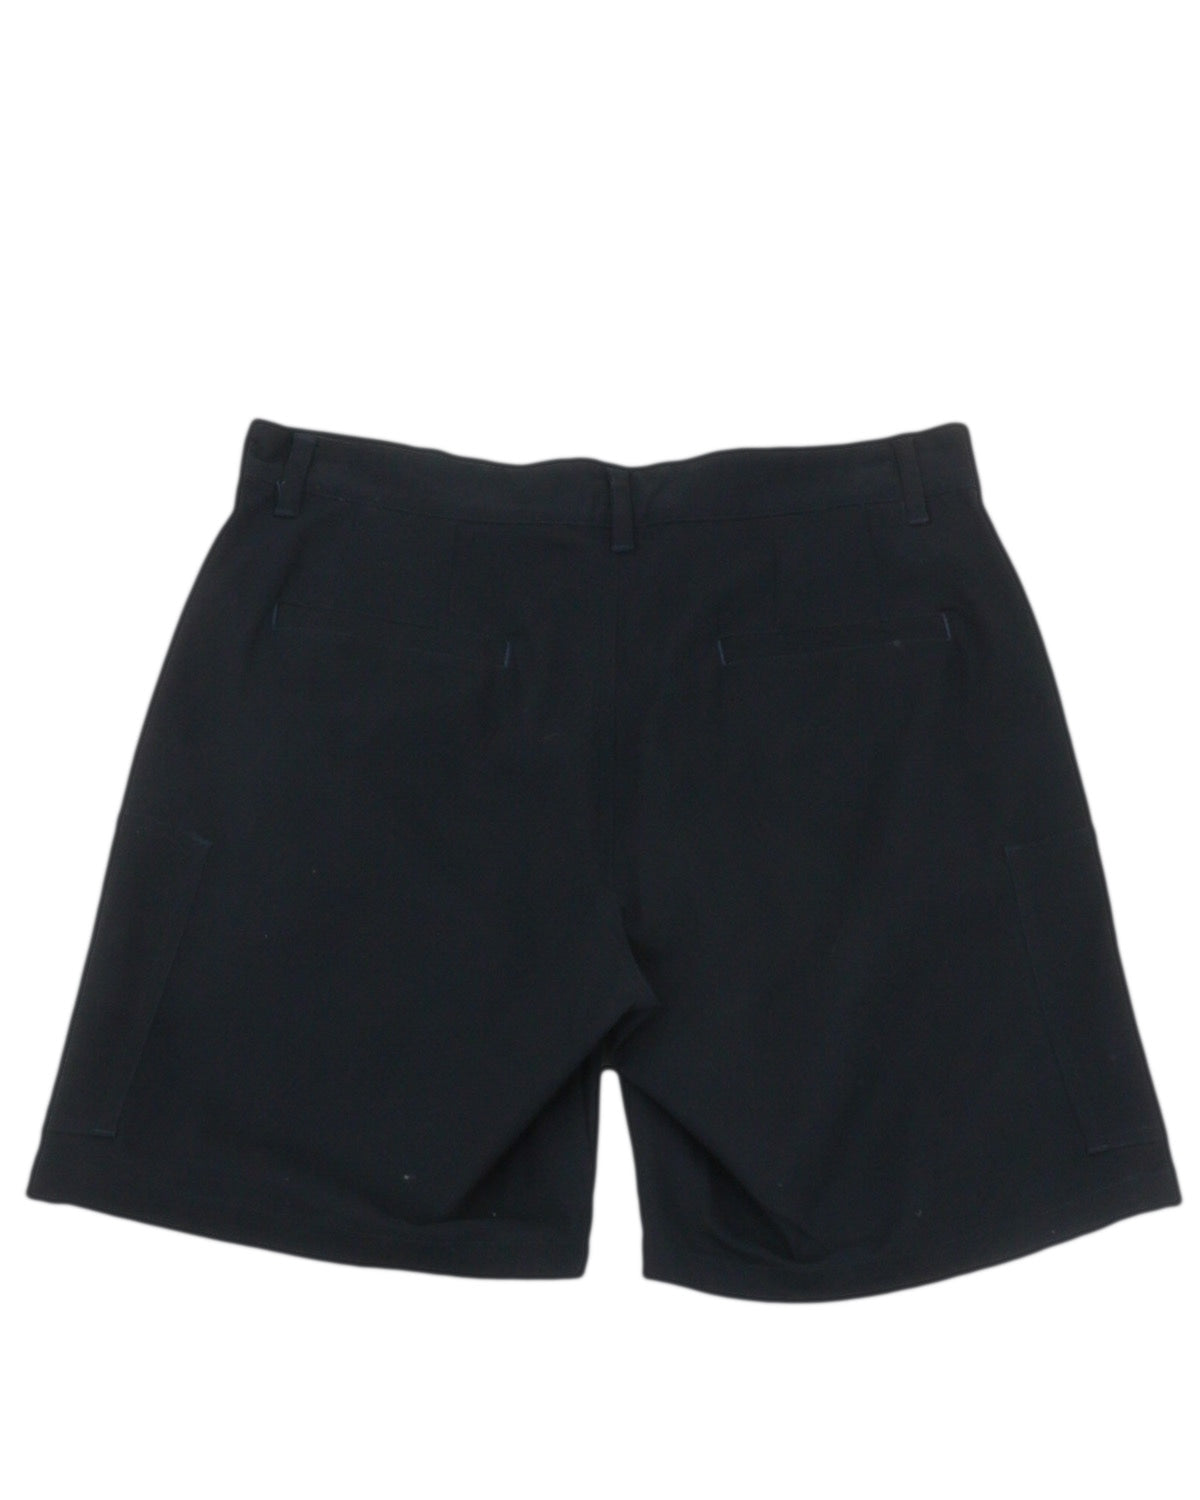 olaf_olaf zip pocket shorts_navy_2_3